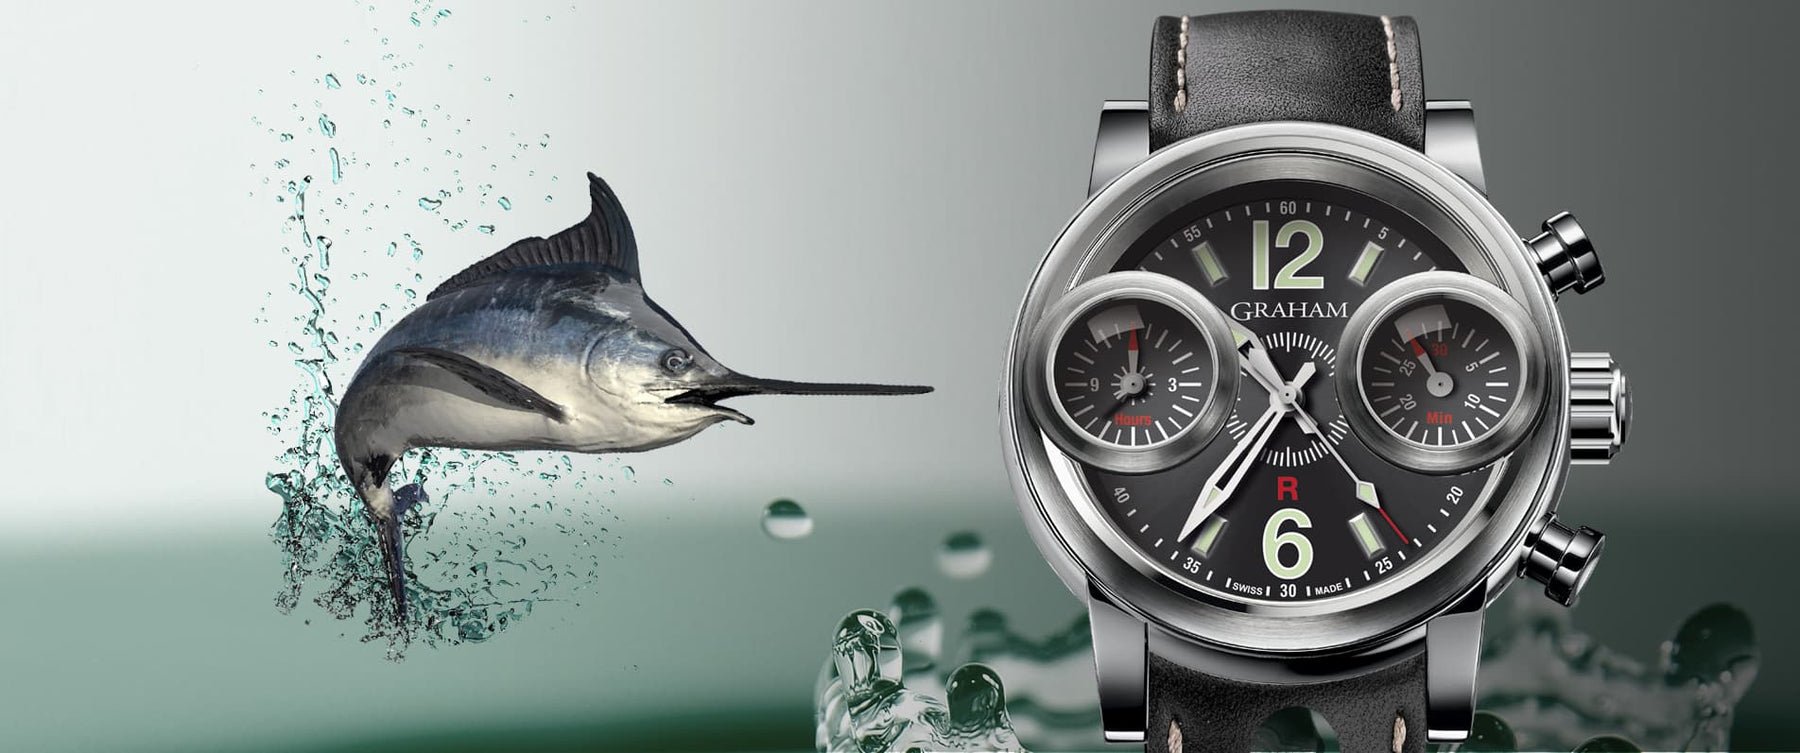 GRAHAM Watches - Swordfish Collection - Big eye watch